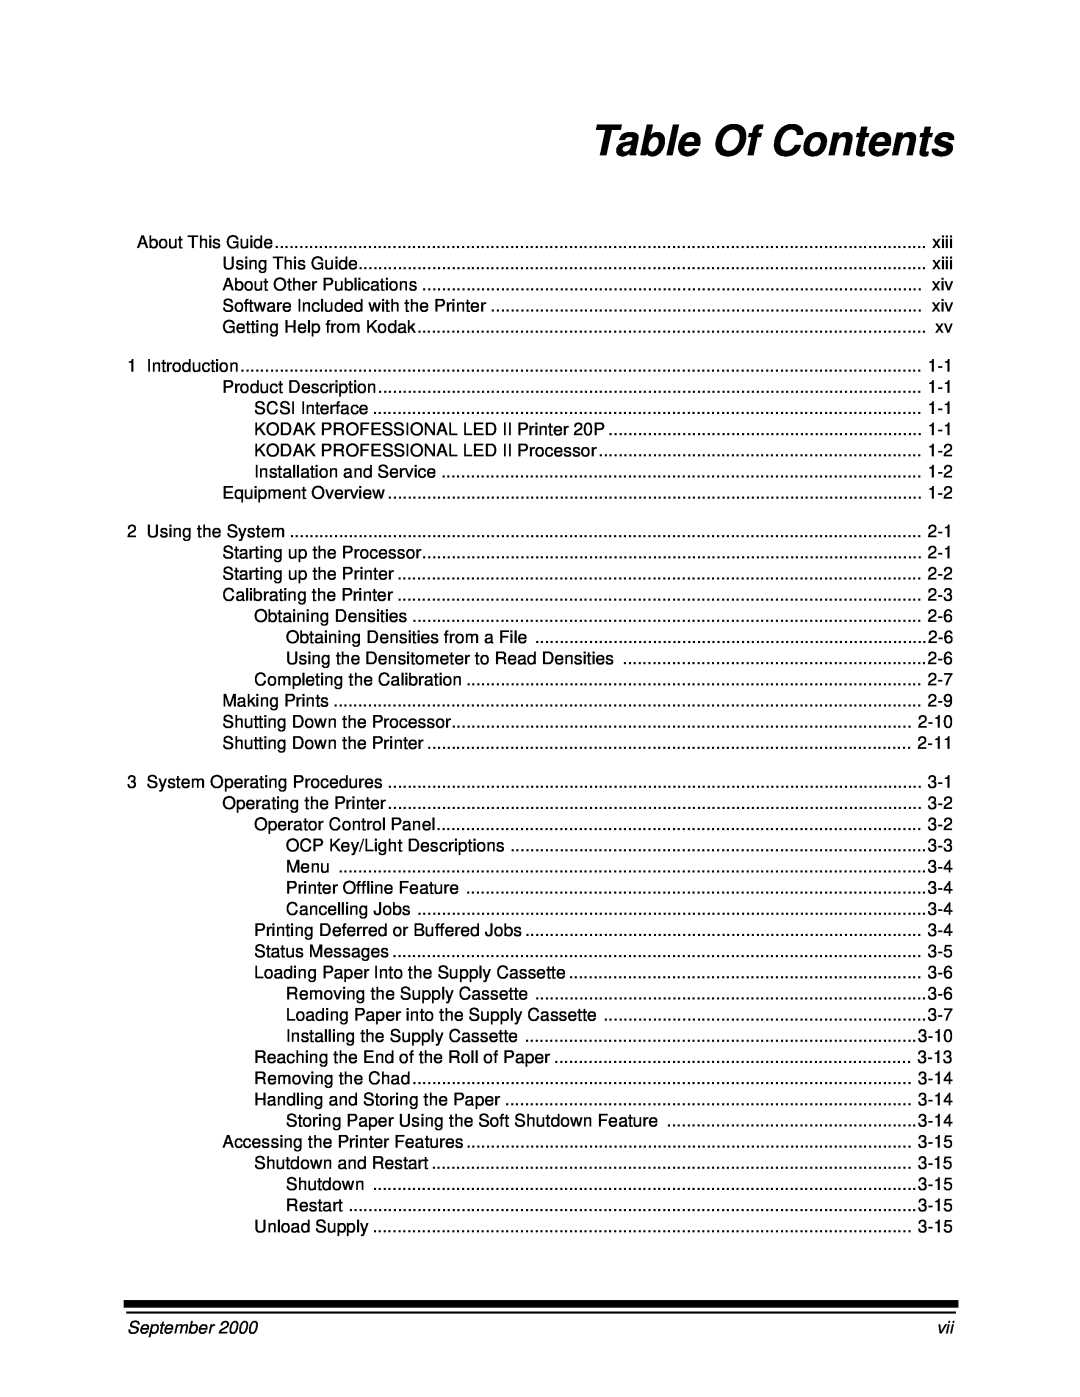 Kodak 20P manual Table Of Contents, September 